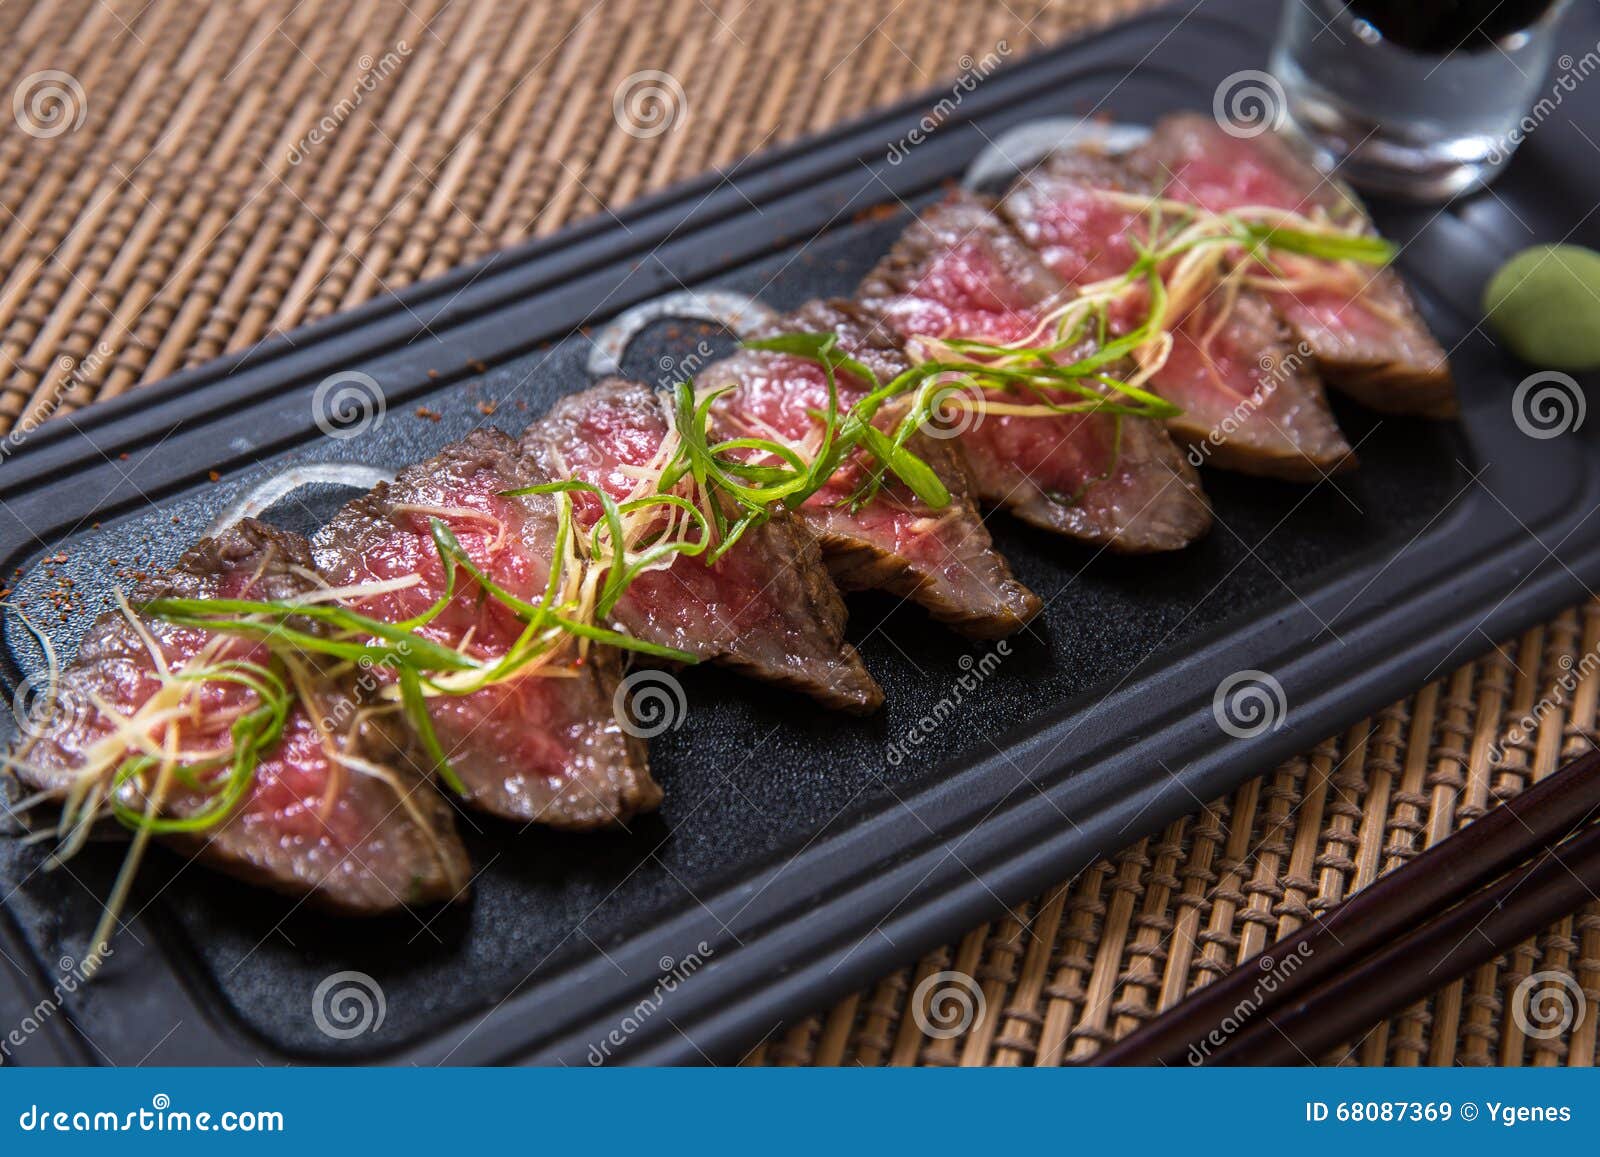 thin slices of kobe beef